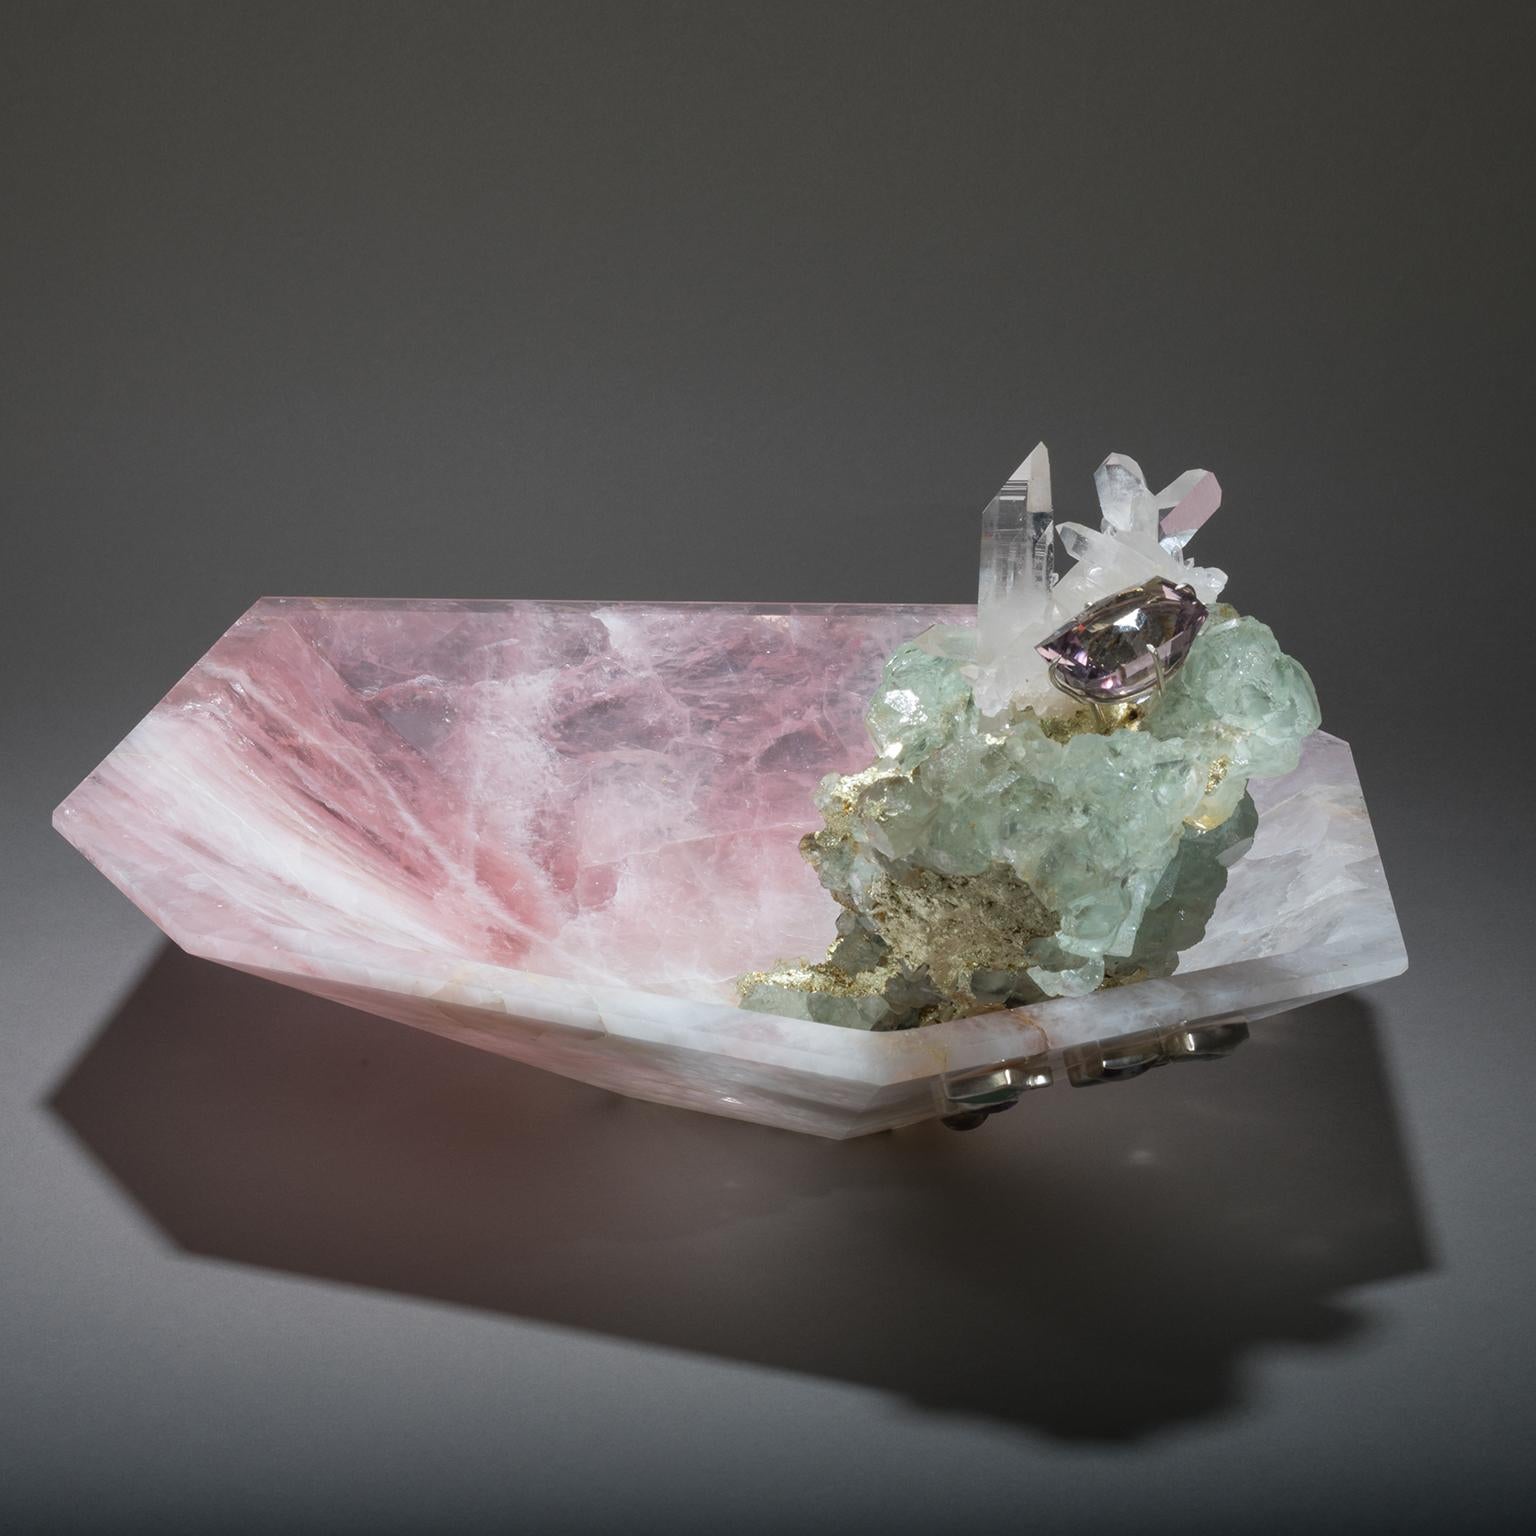 American Studio Greytak 'Crystal Bling Bowl 9' Hand Carved Rose Quartz With Amethyst Gem